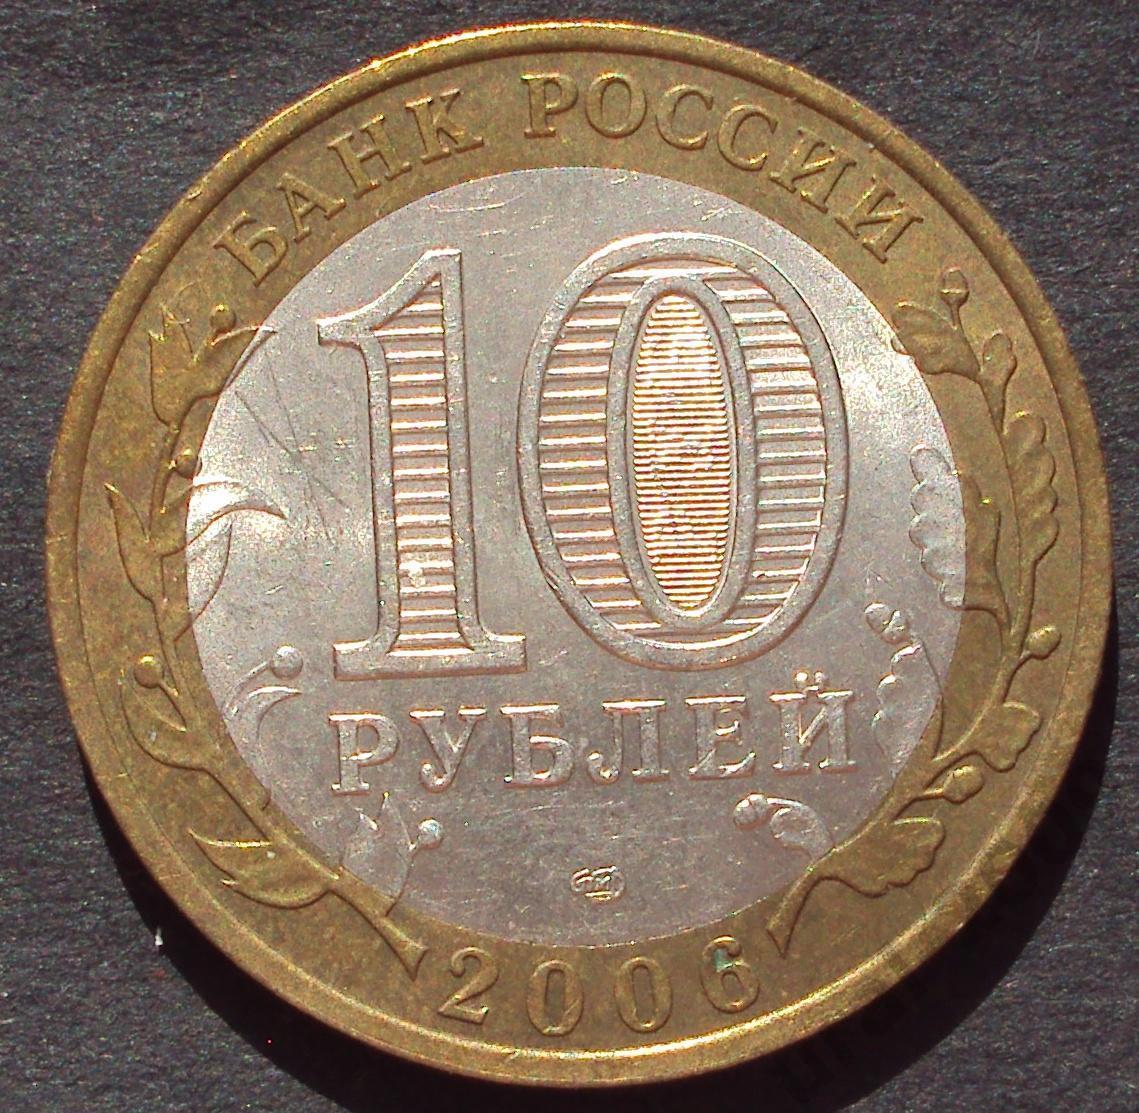 10 рублей 2006 год! Республика Алтай. СПМД. (А-37).